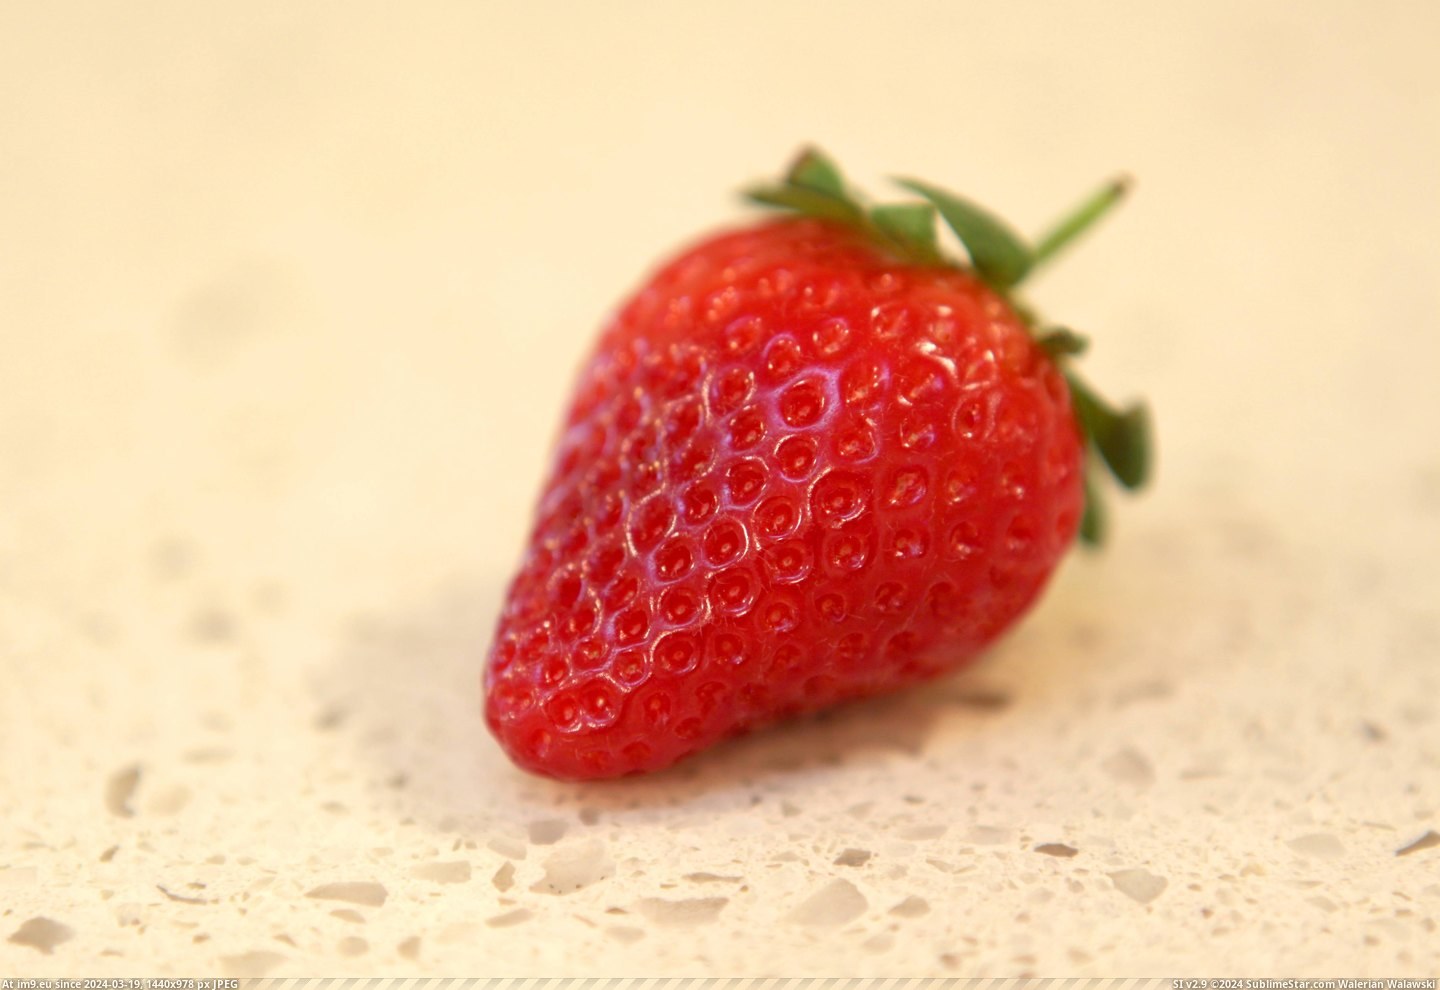 #Strawberry  #Seeds [Mildlyinteresting] This strawberry had 204 seeds. 3 Pic. (Изображение из альбом My r/MILDLYINTERESTING favs))